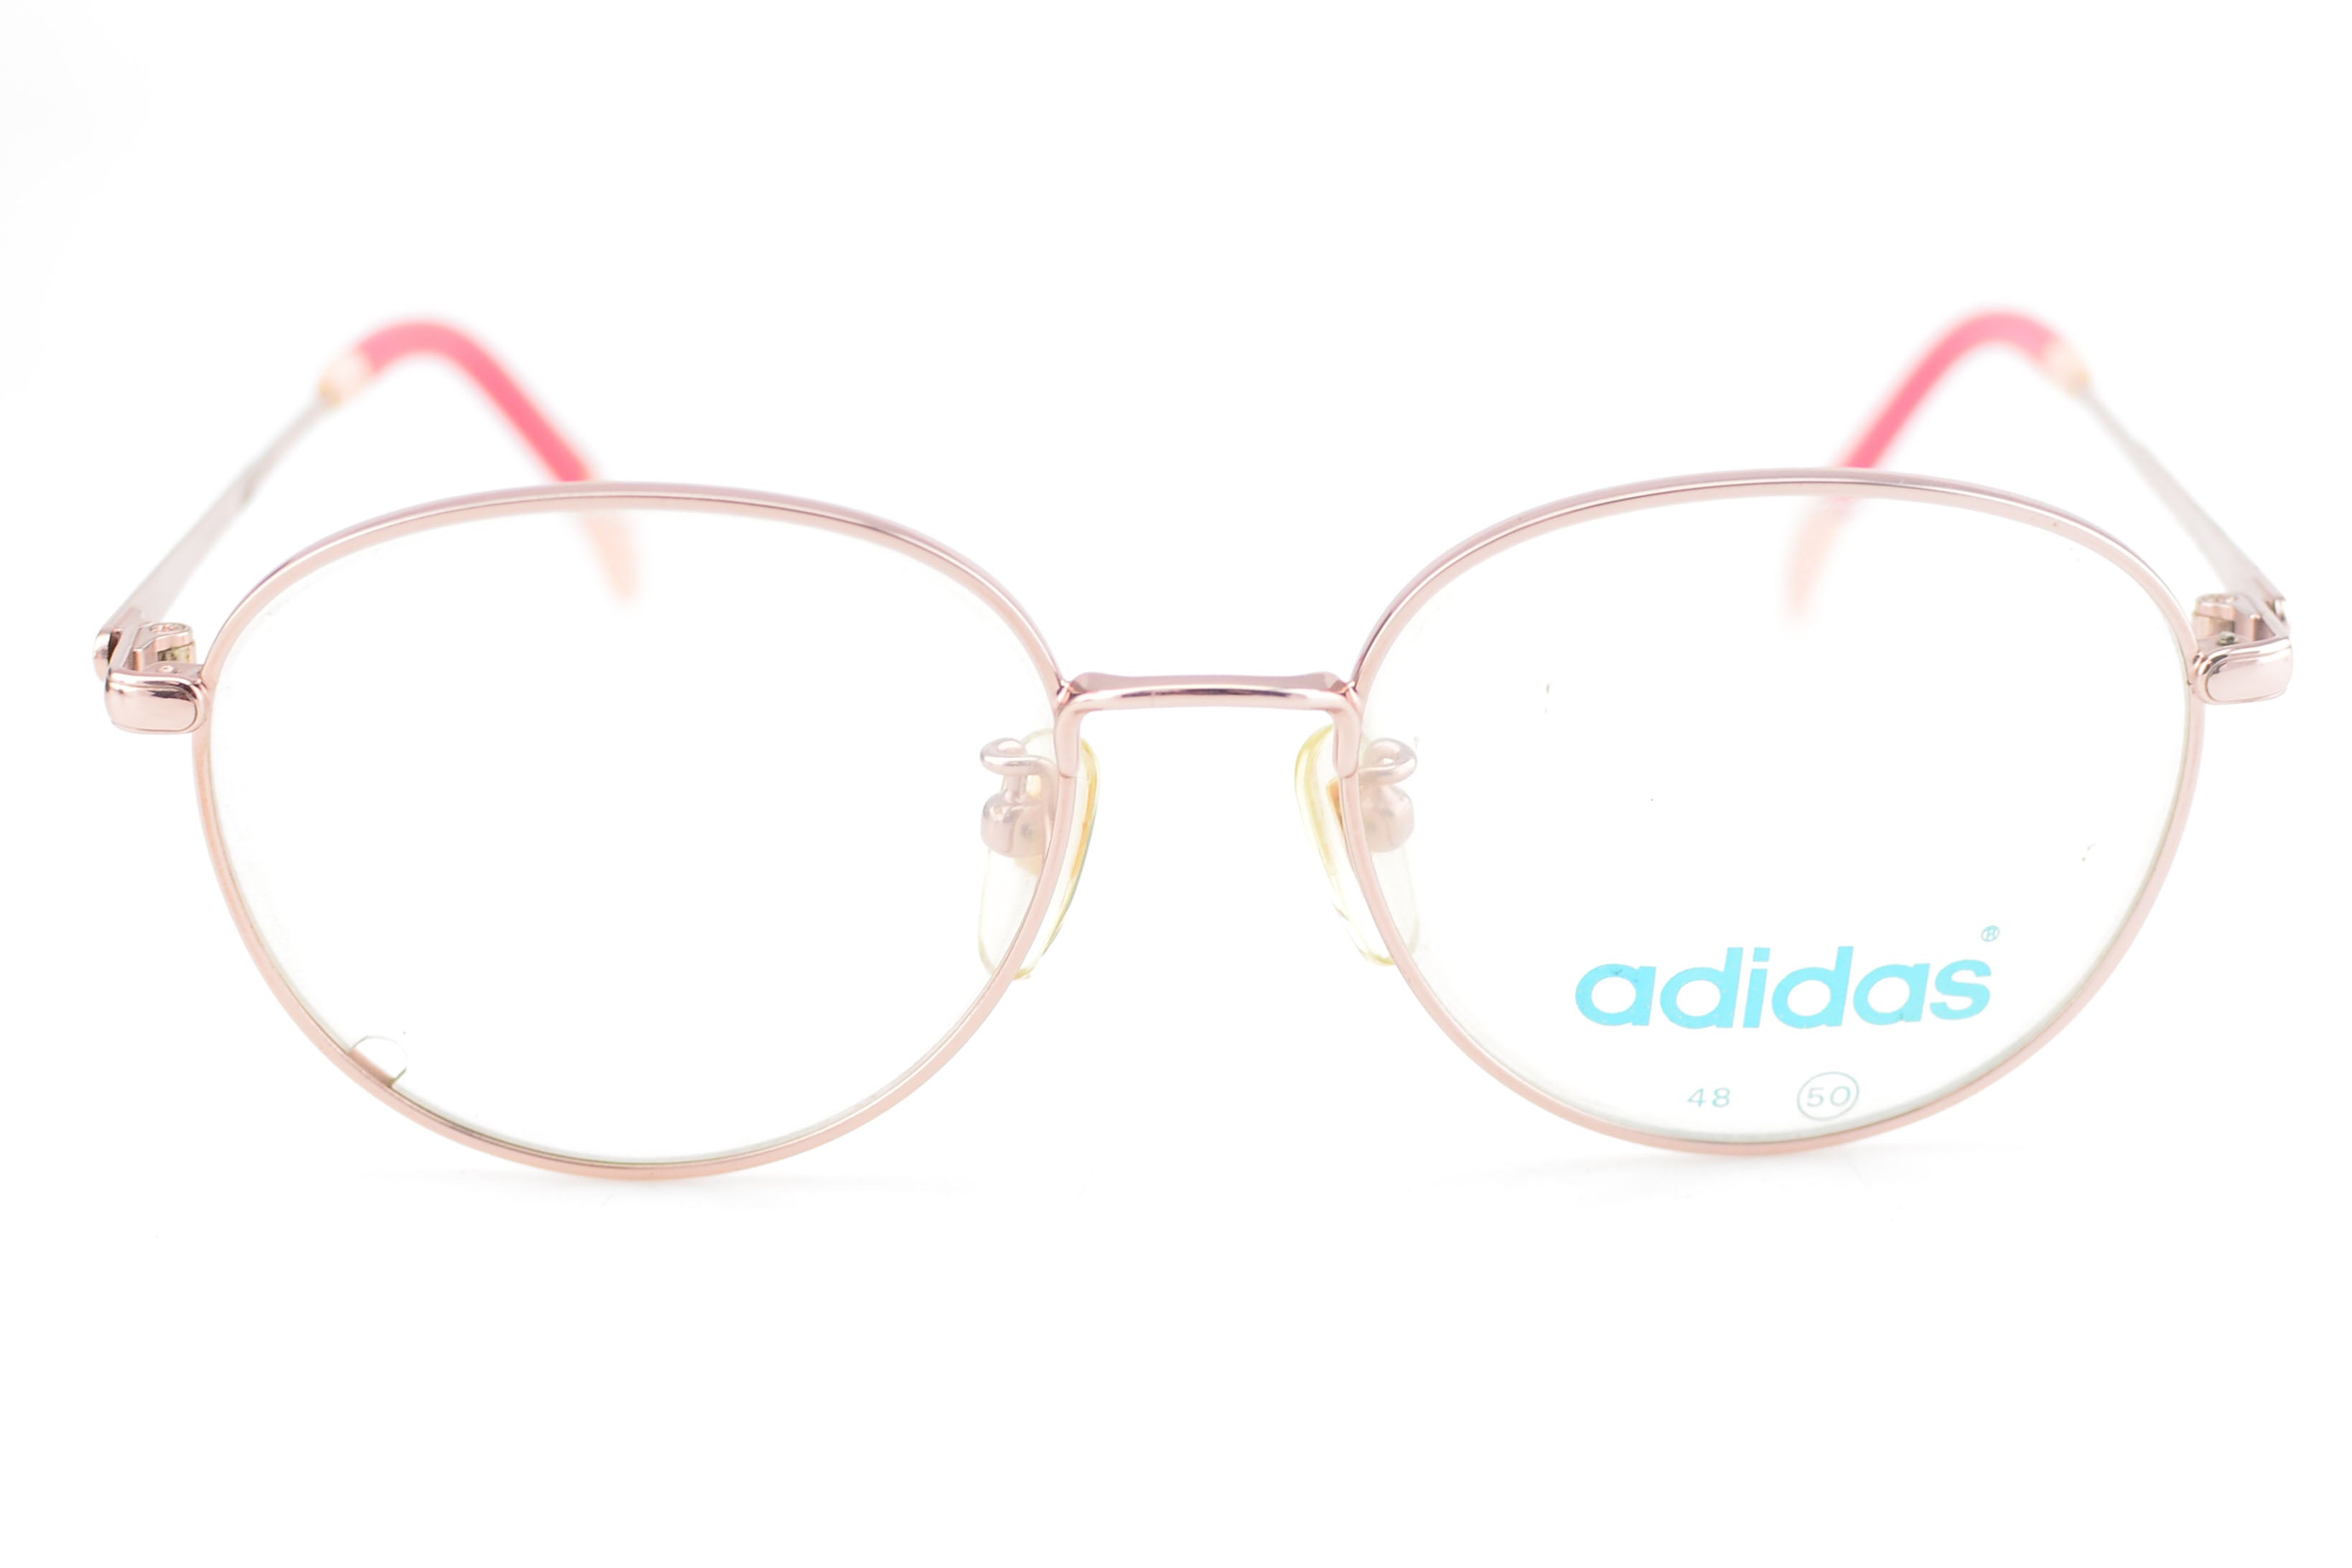 adidas rimless glasses